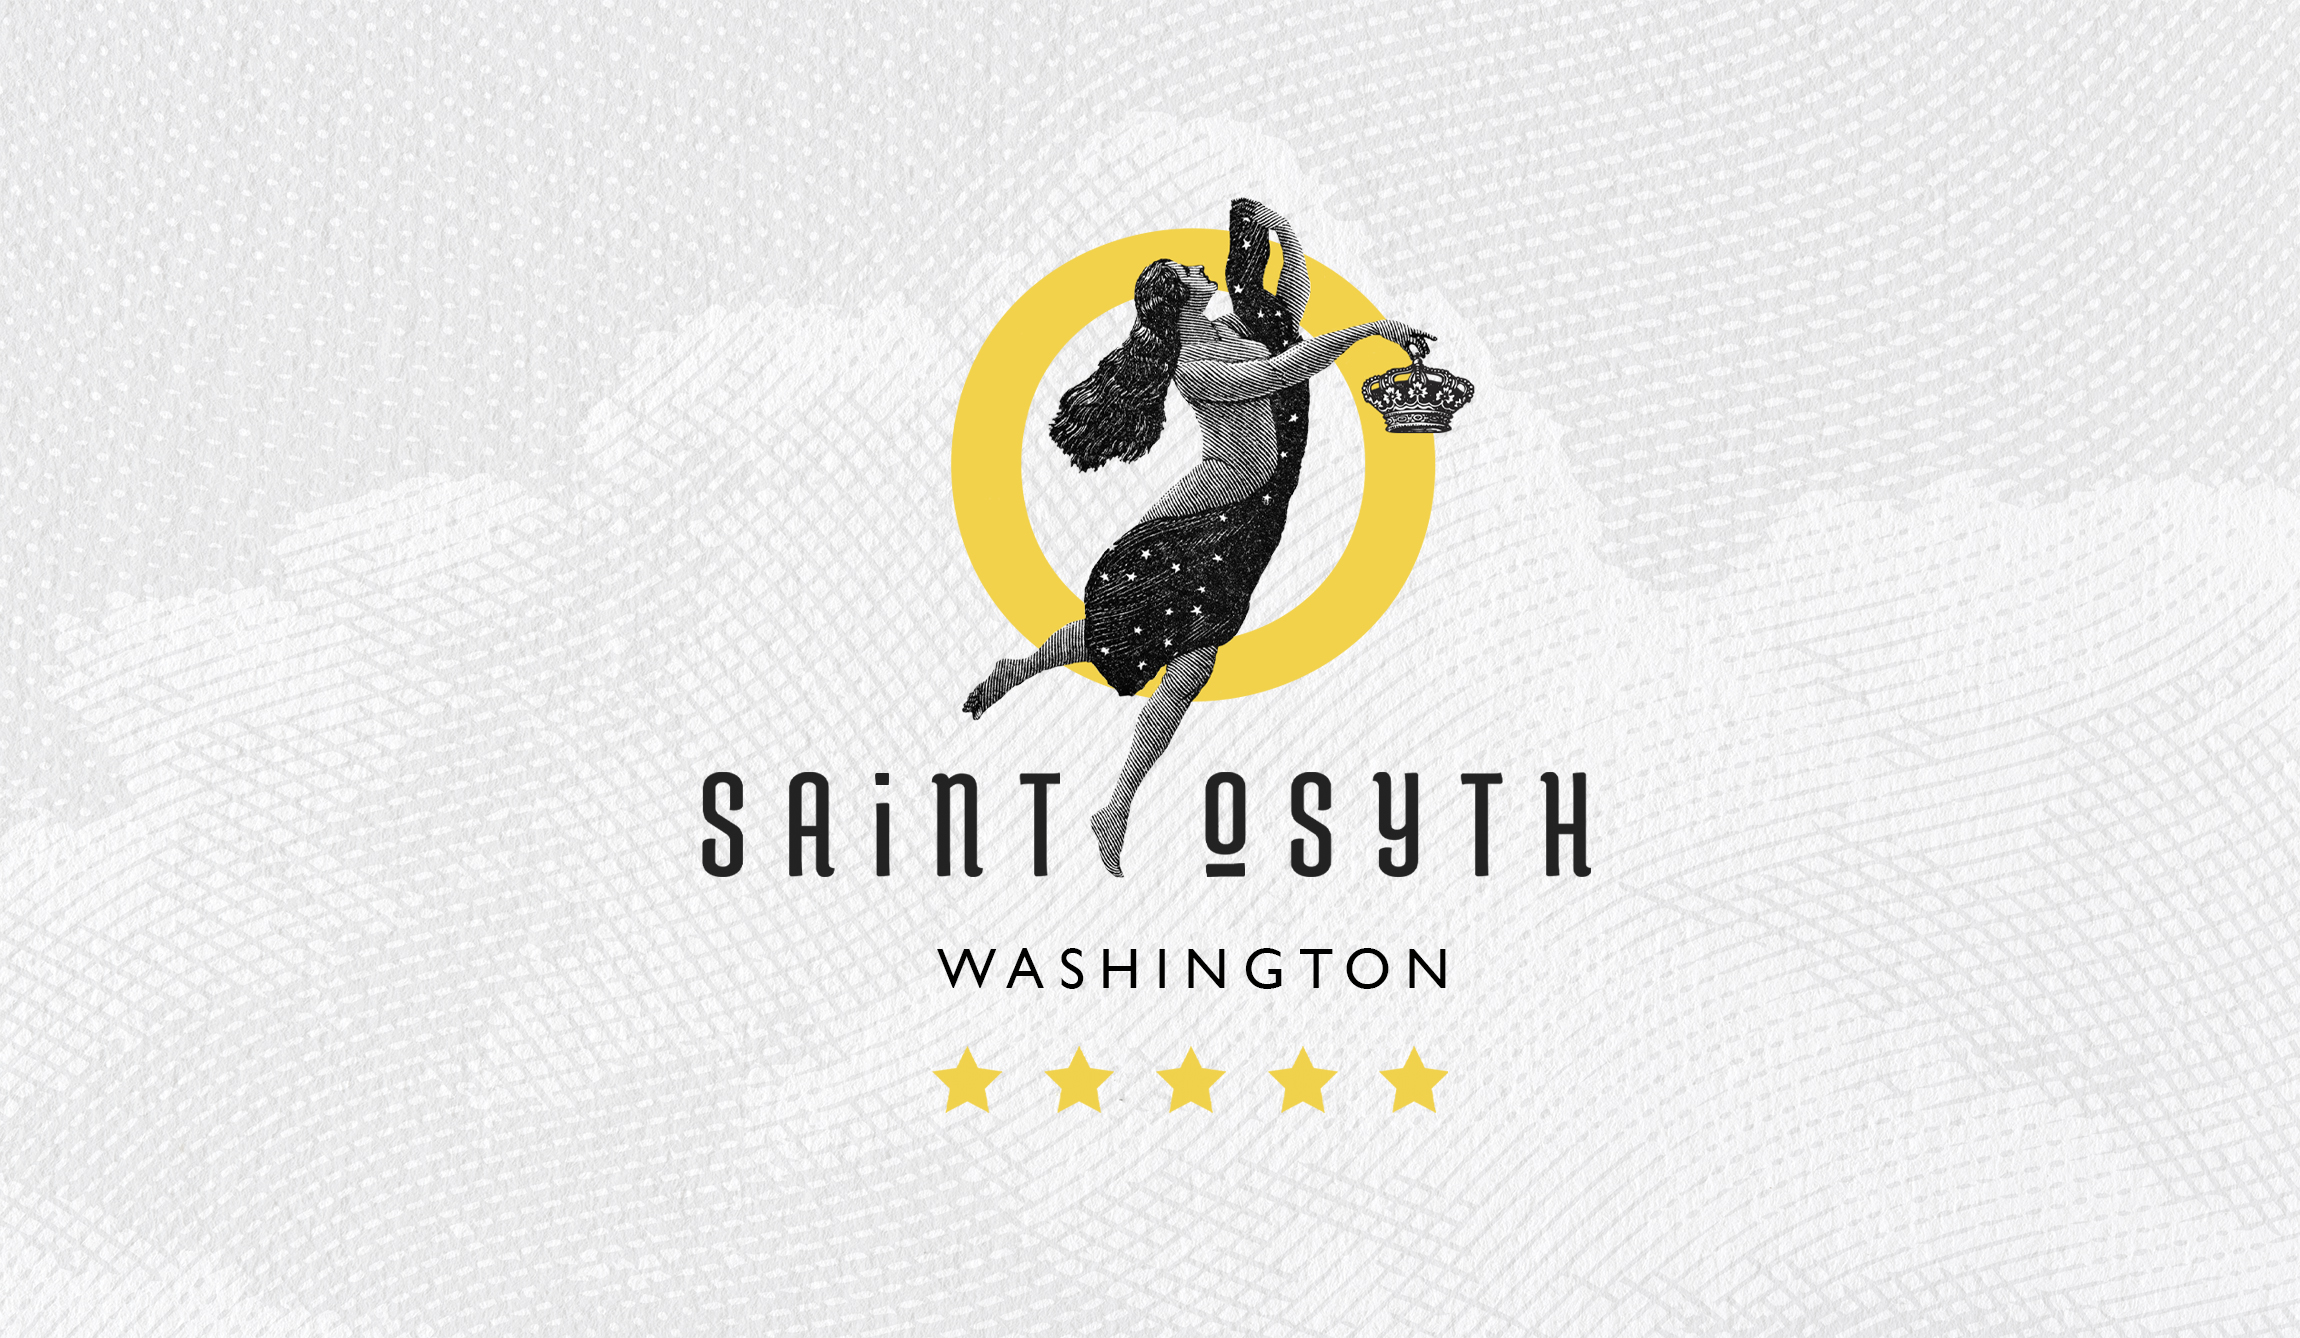 Saint Osyth logo, designed by MR.SMiTH Creative Studio